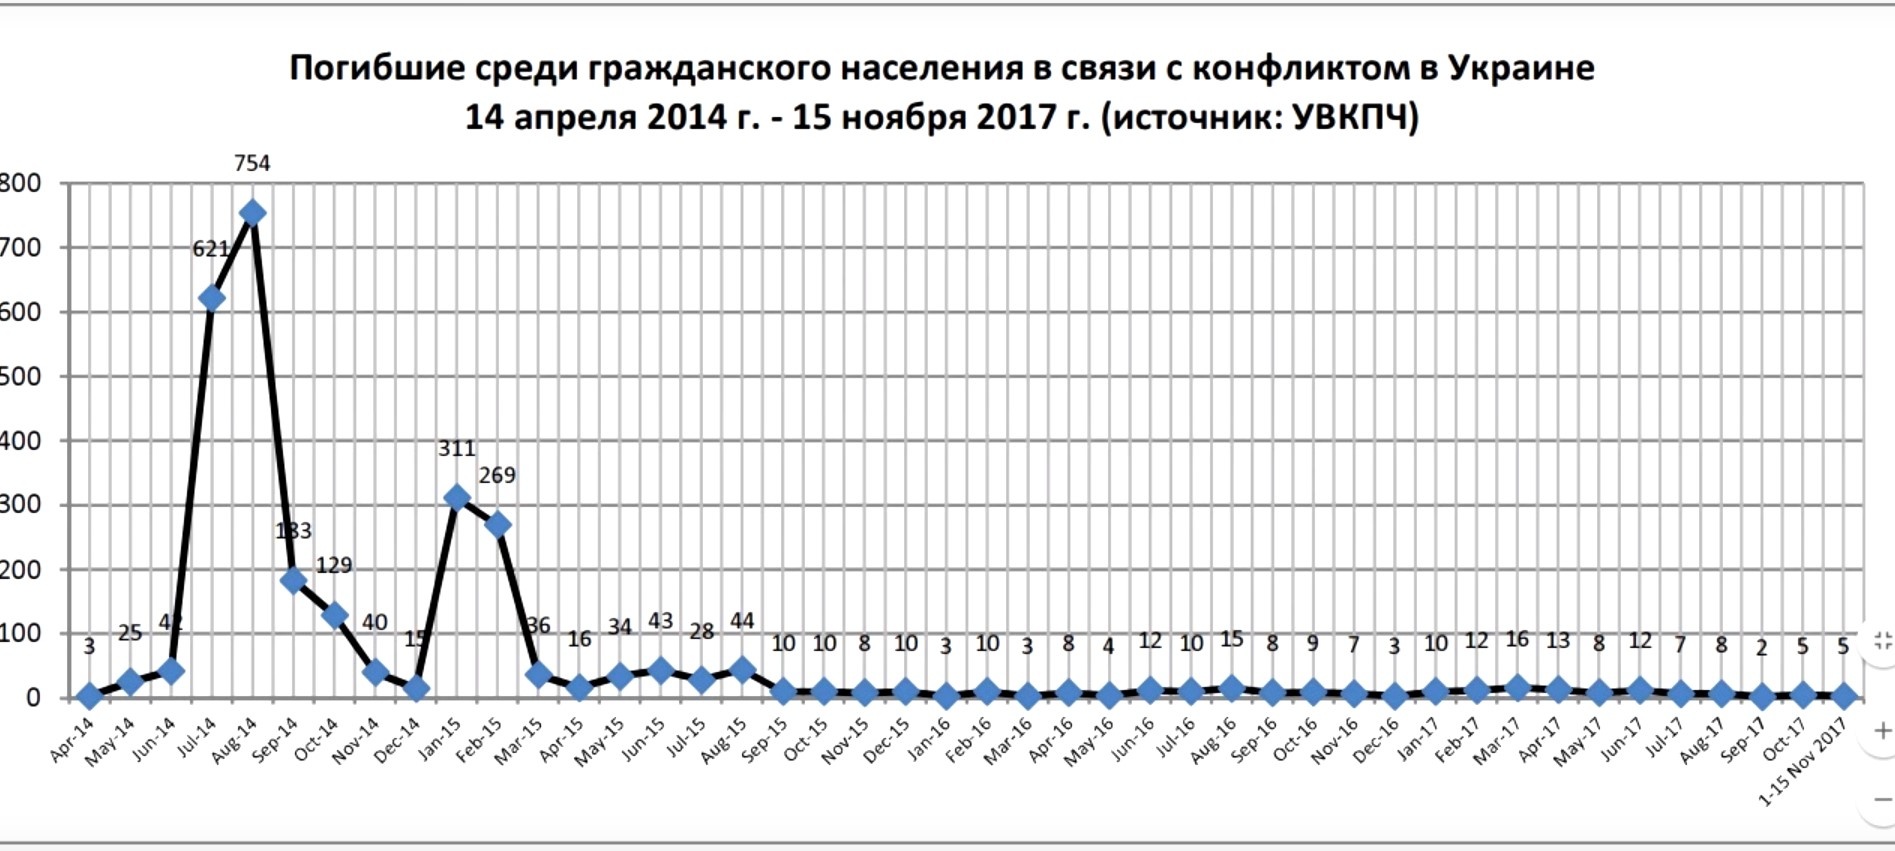 Сколько погибло за время операции. Статистика жертв на Донбассе по годам. График жертв на Донбассе по годам. График гибели людей на Донбассе по годам. Число погибших на Донбассе по годам.